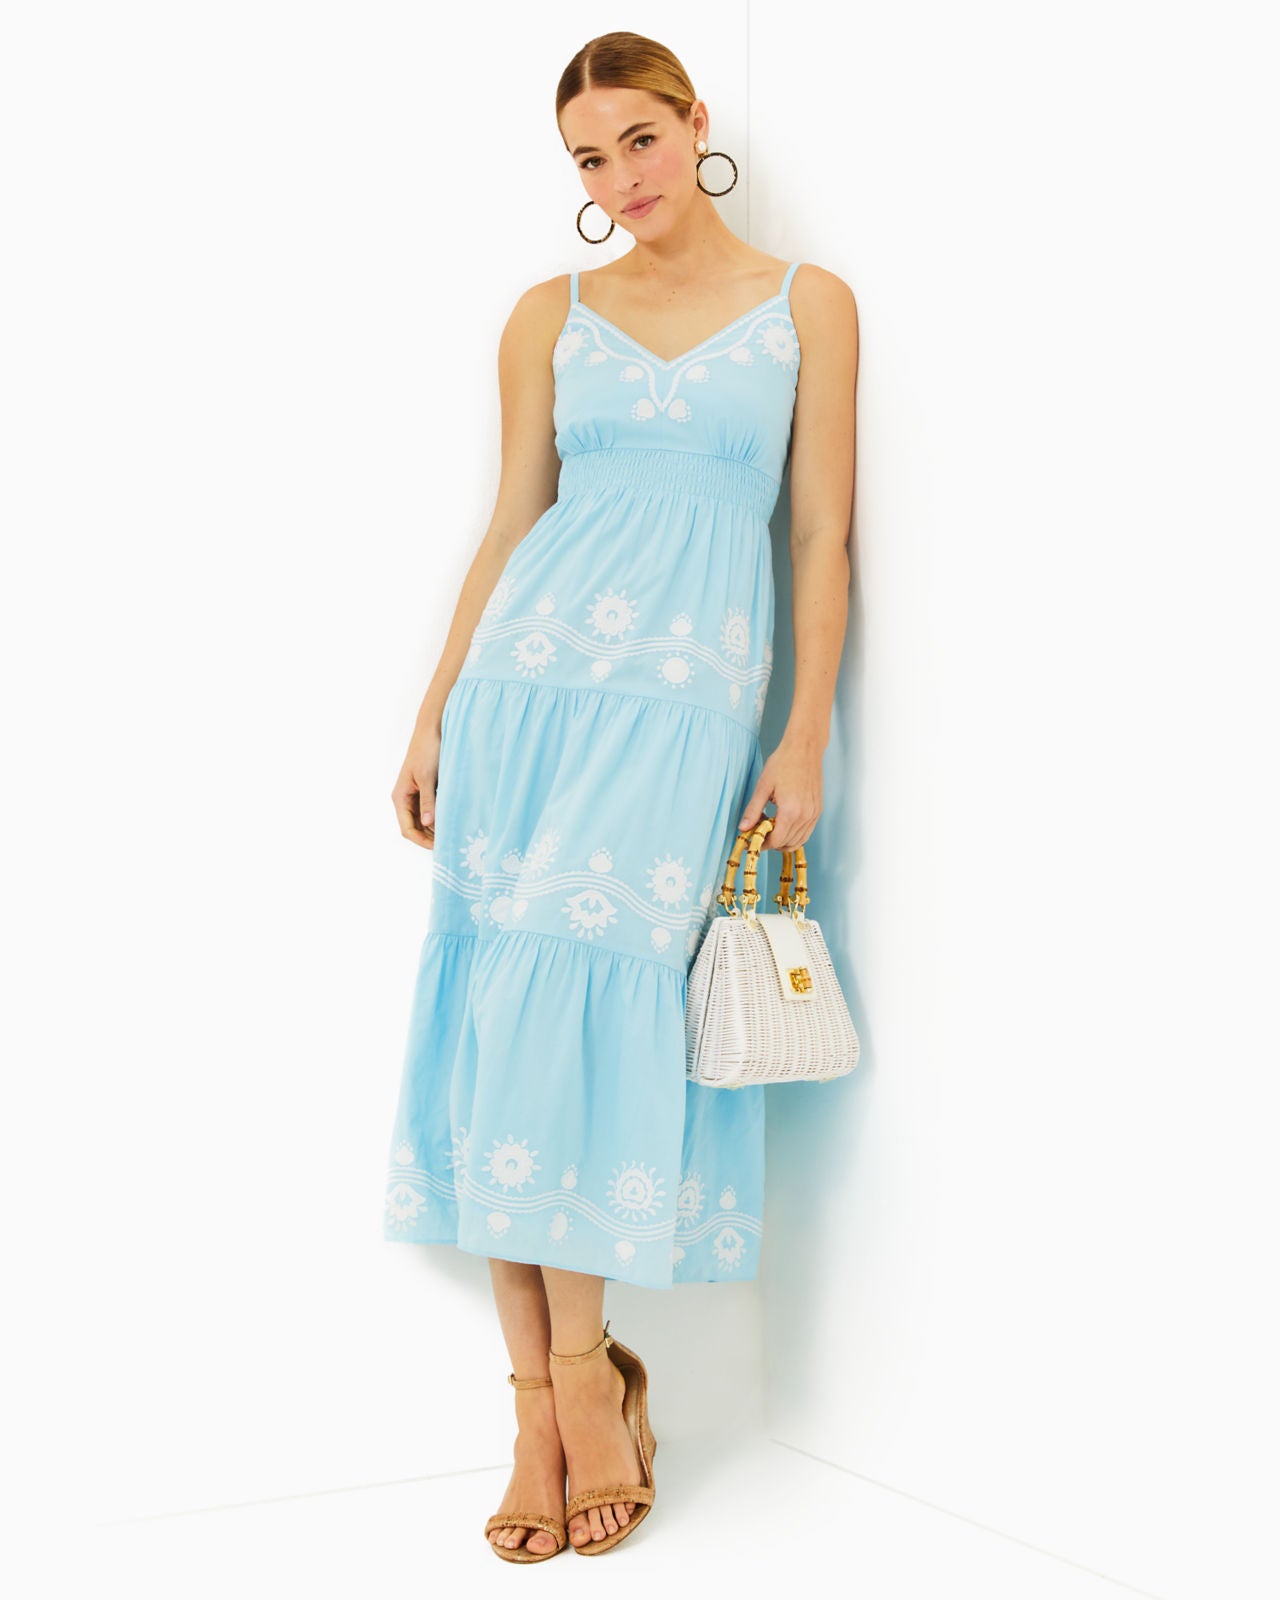 Aviry Embroidered Cotton Dress